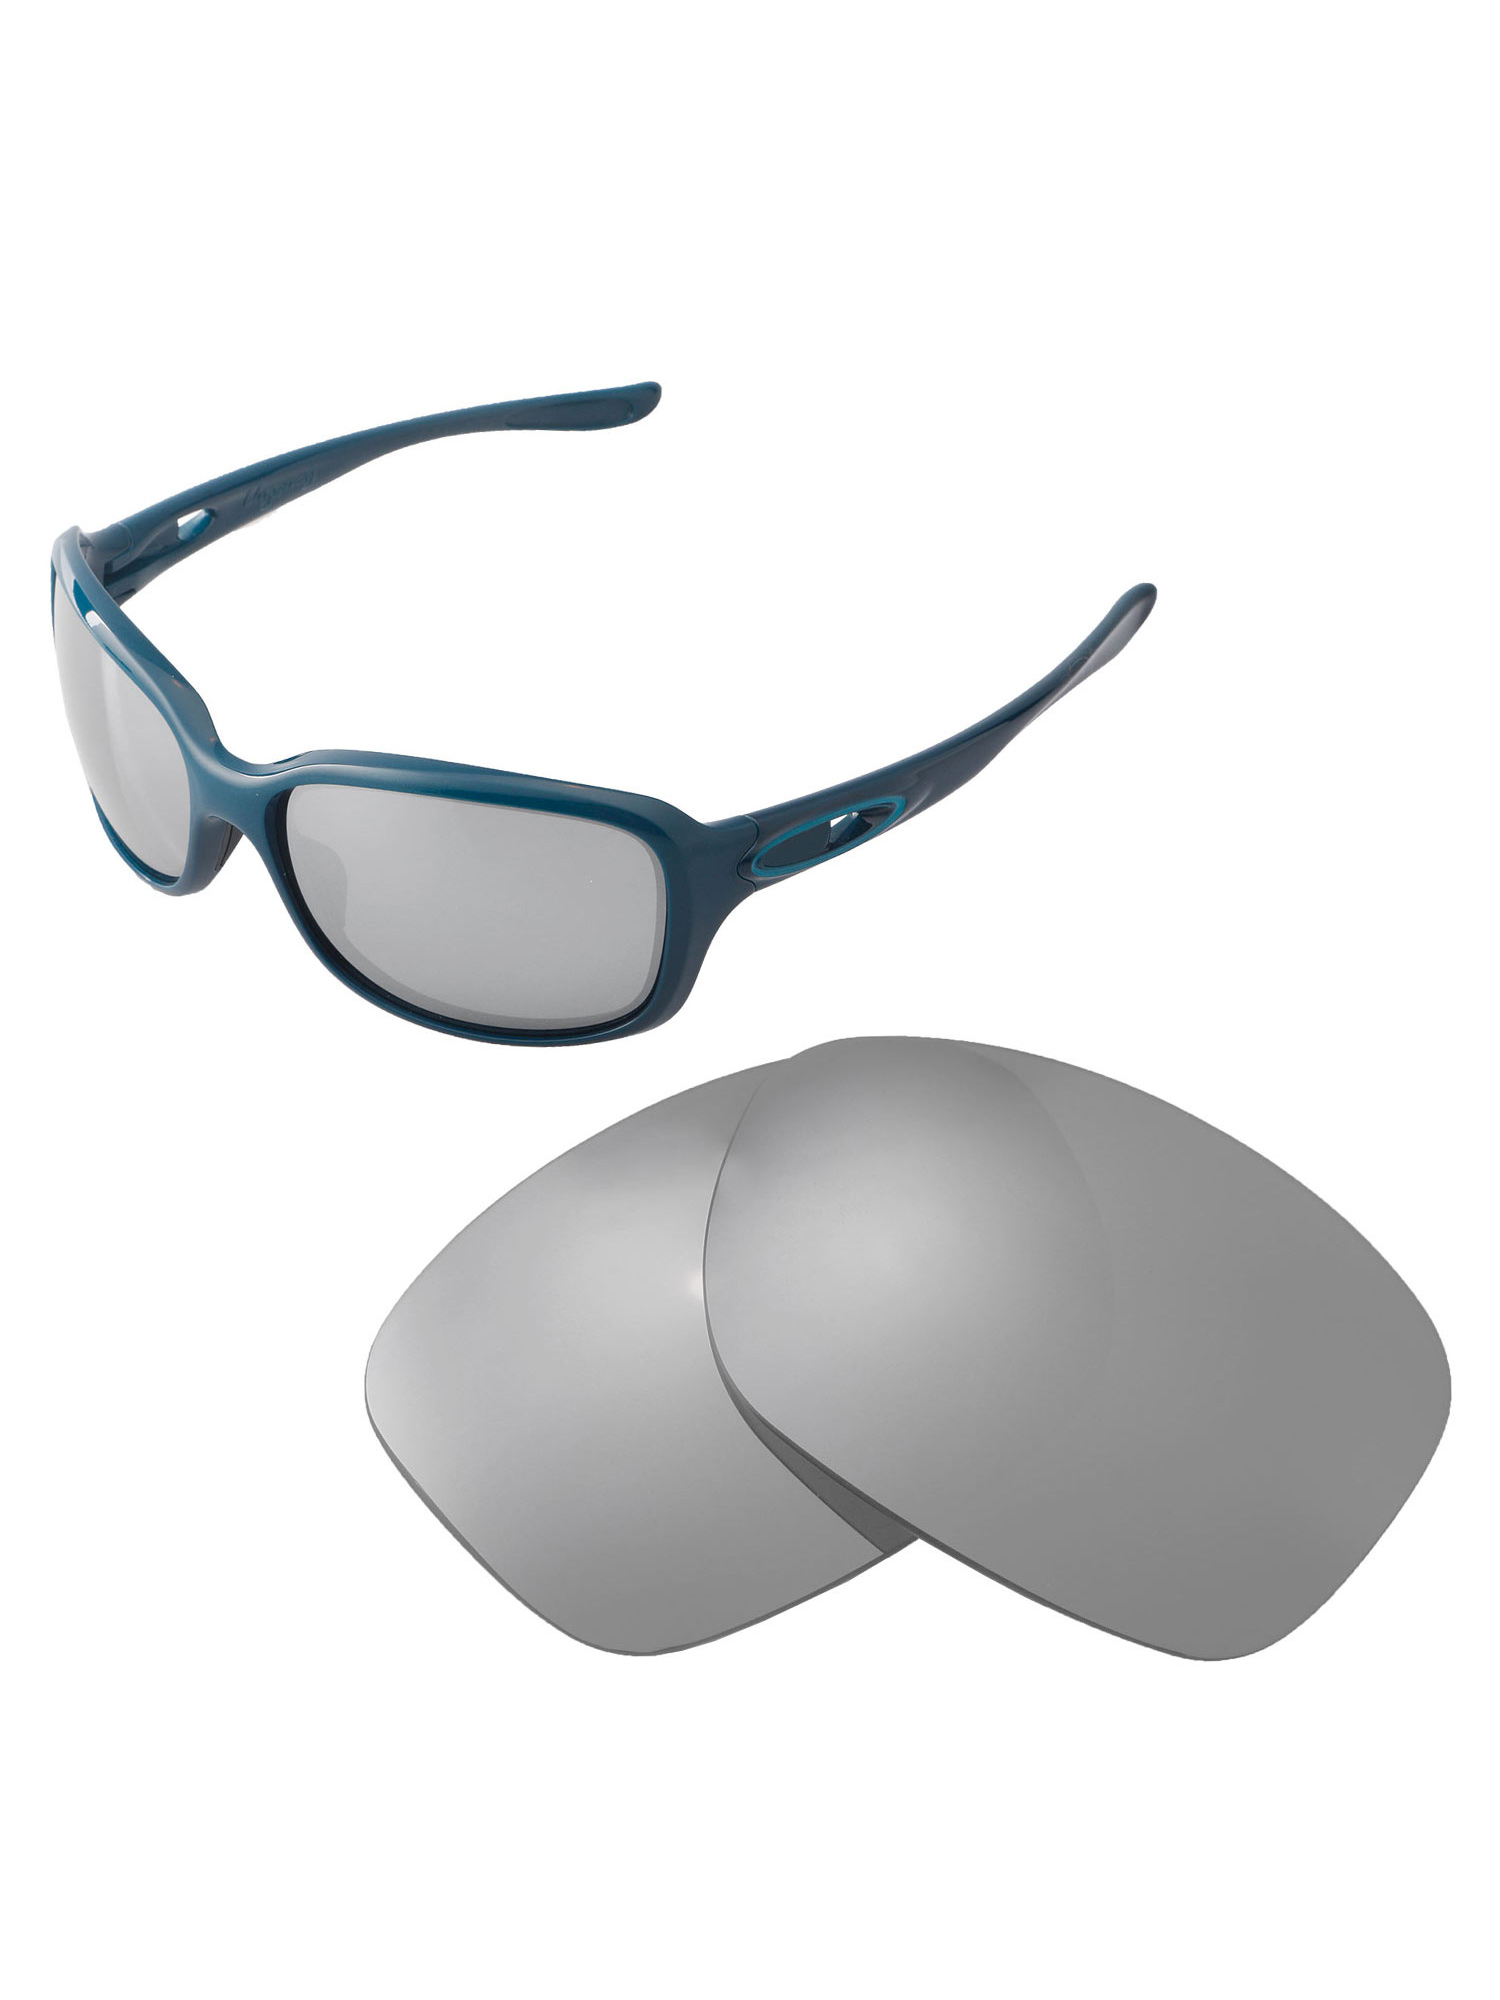 Walleva Titanium Polarized Replacement Lenses for Oakley Urgency Sunglasses - image 1 of 6